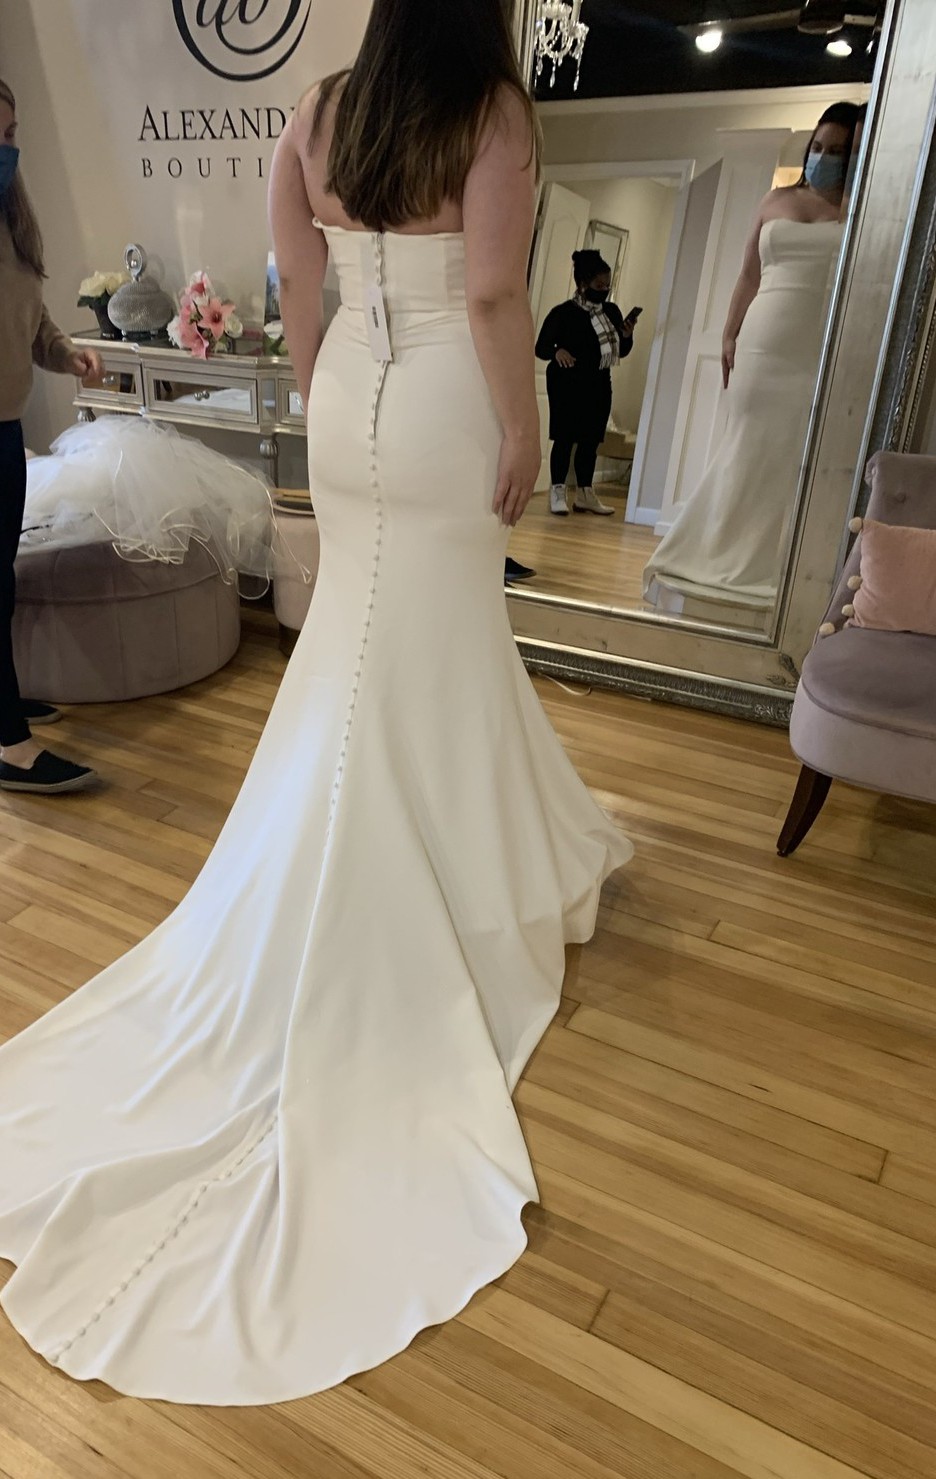 9810 Allure Bridals Slim-Fitting Bridal Gown